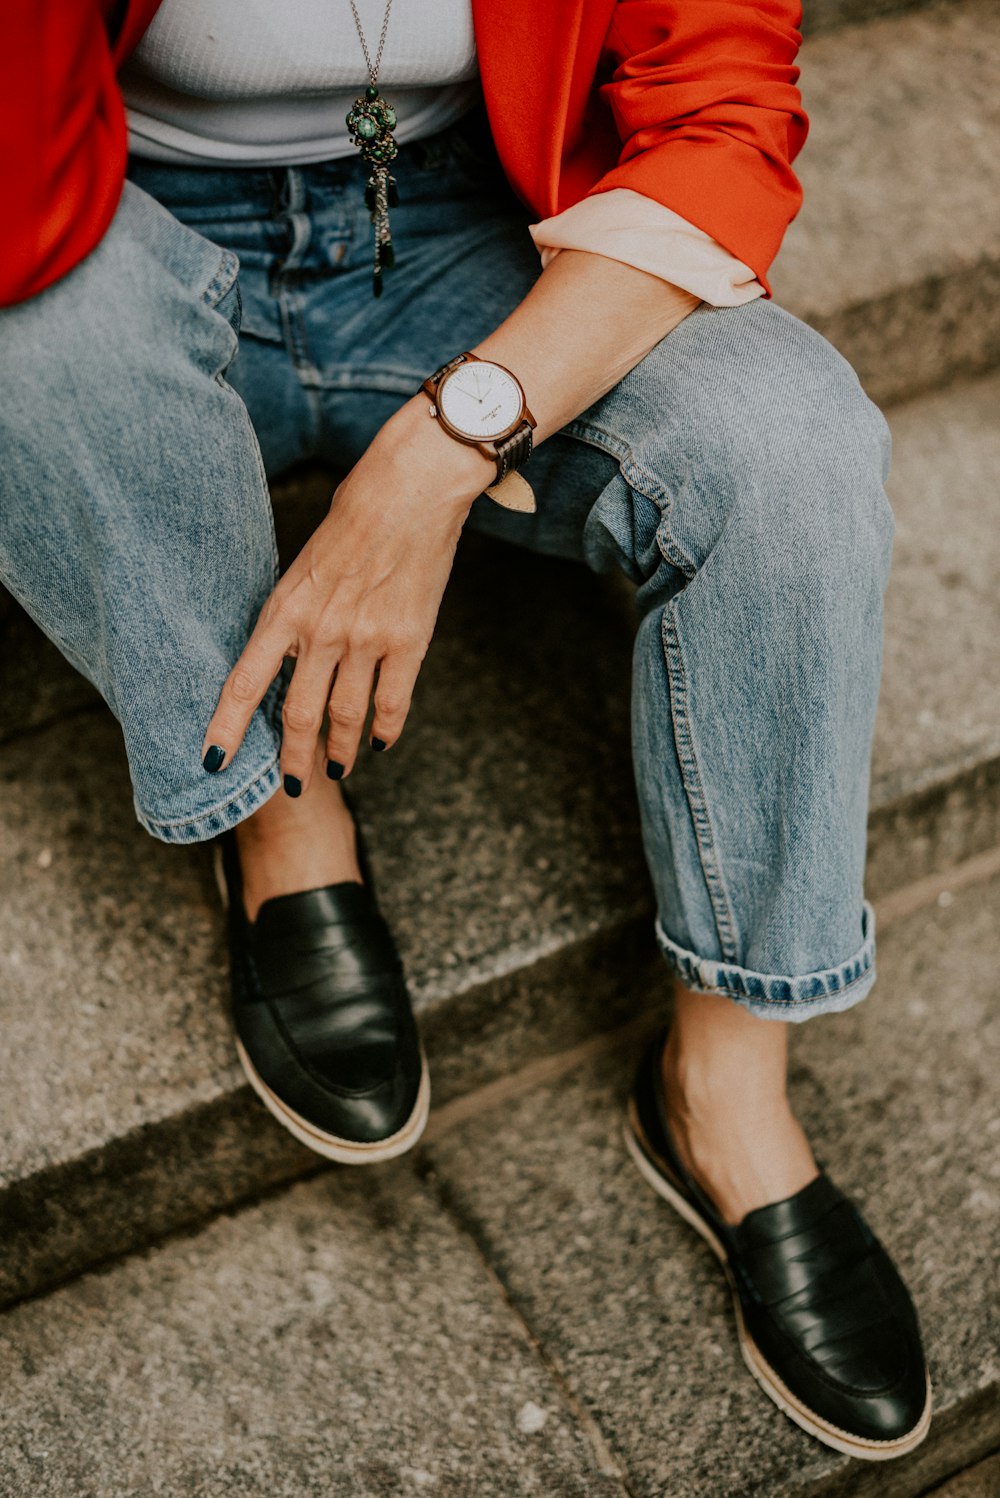 a woman sitting on steps wearing a watch